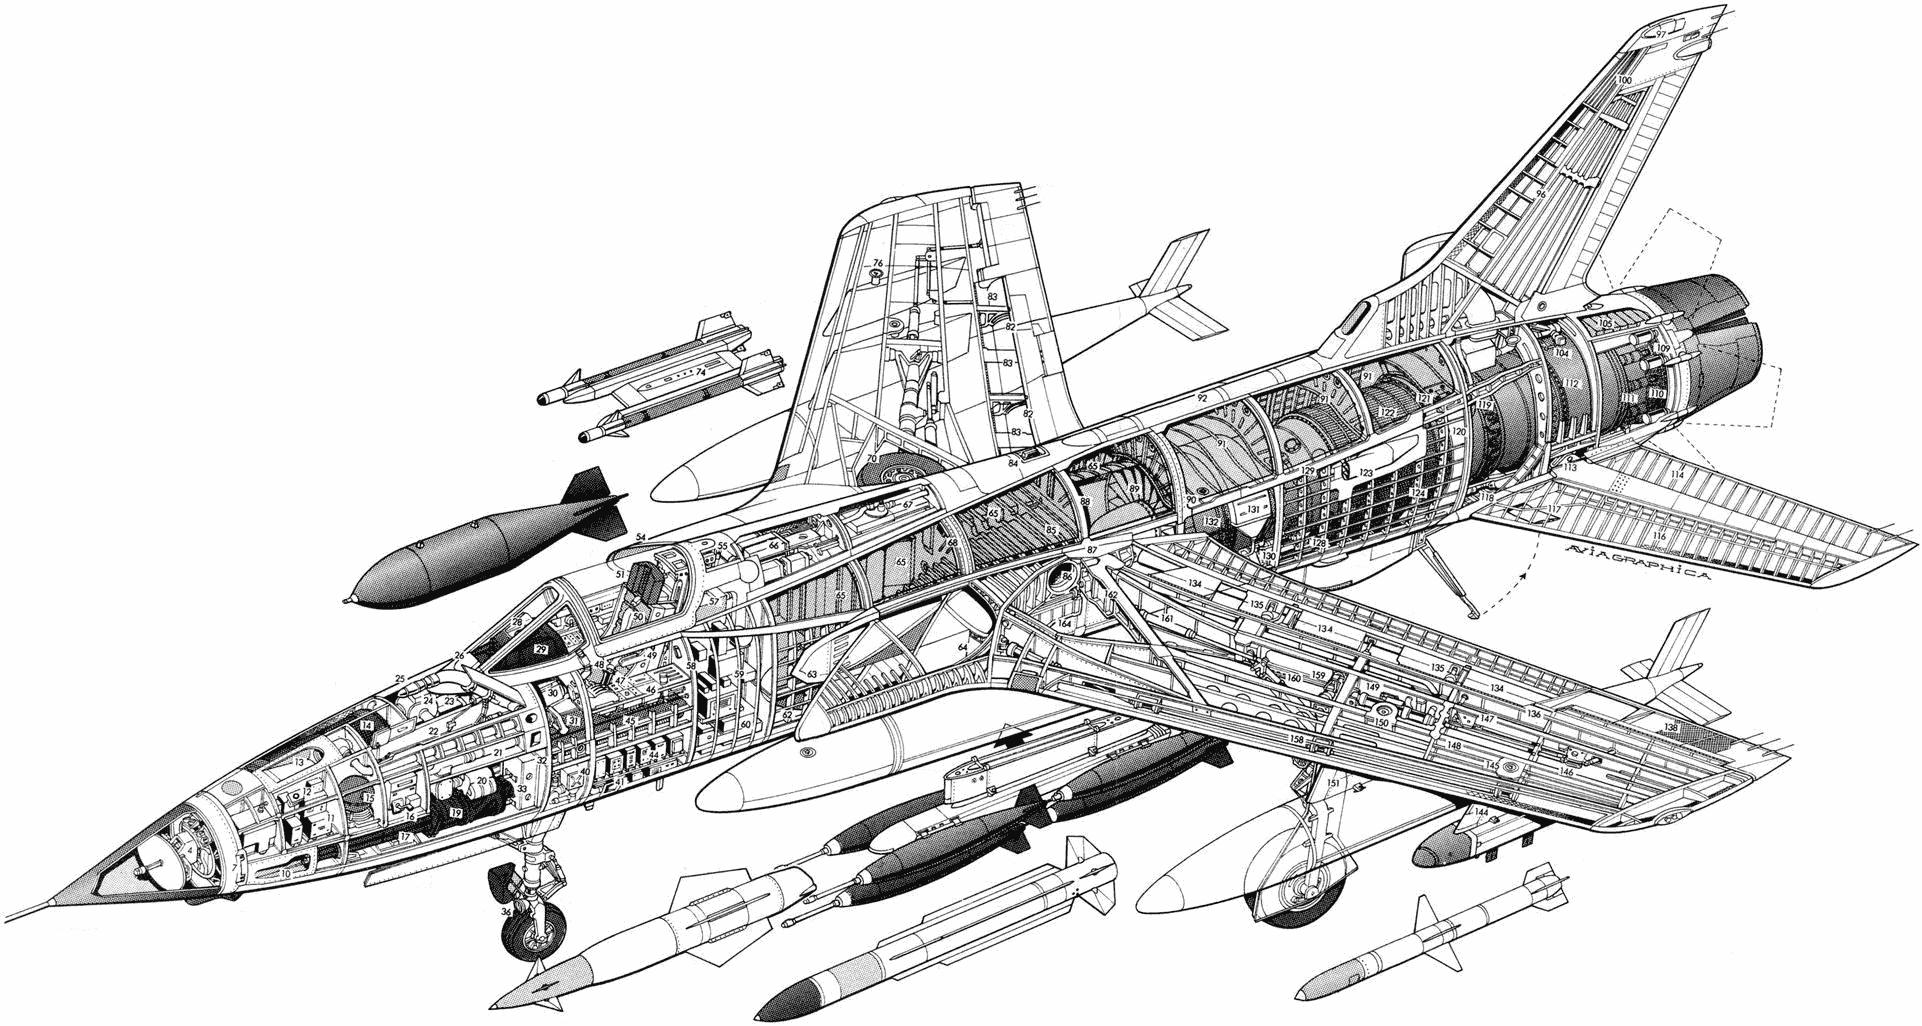 Republic F-105 Thunderchief cutaway drawing